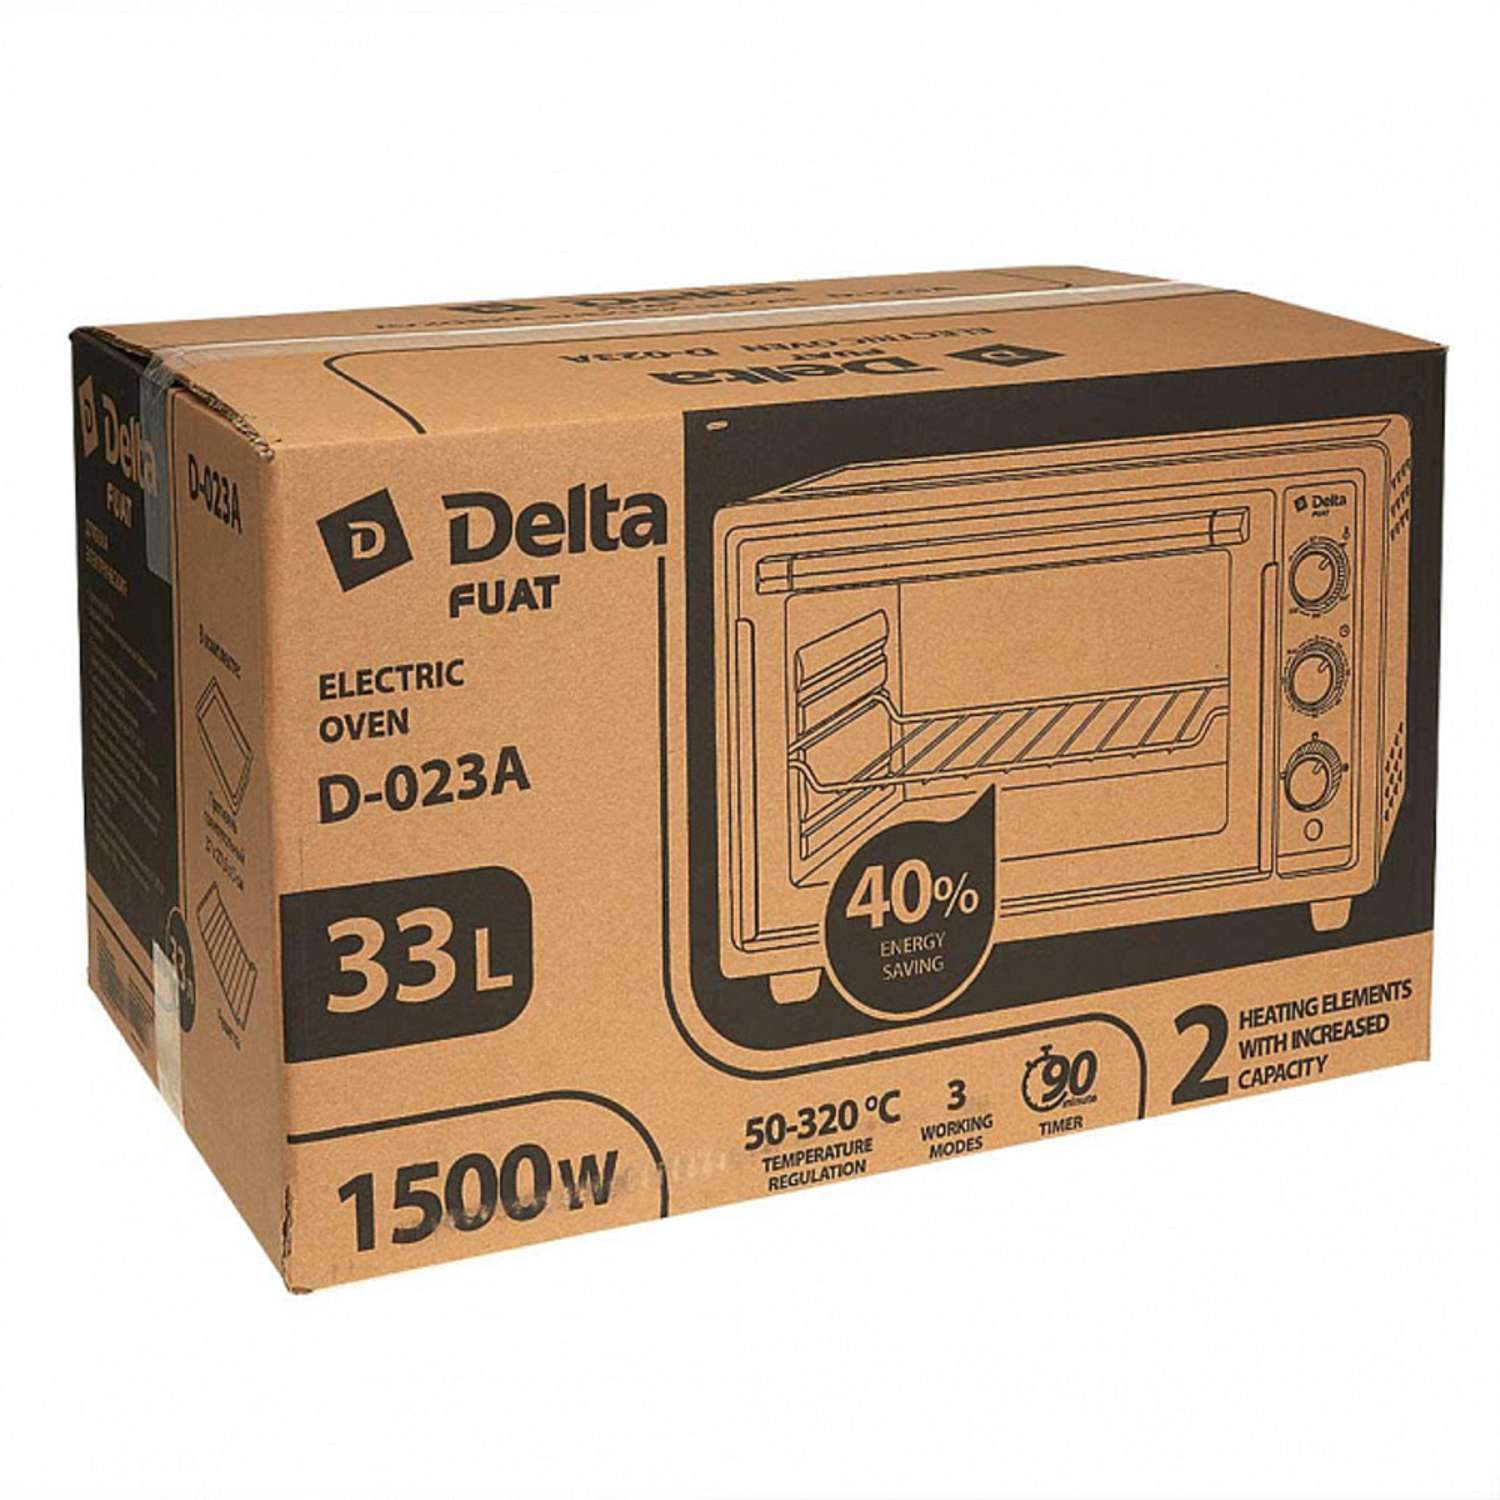 Мини-печь Delta электрическая D-023A Fuat таймер 3 режима 33 л 1500 Вт - фото 8